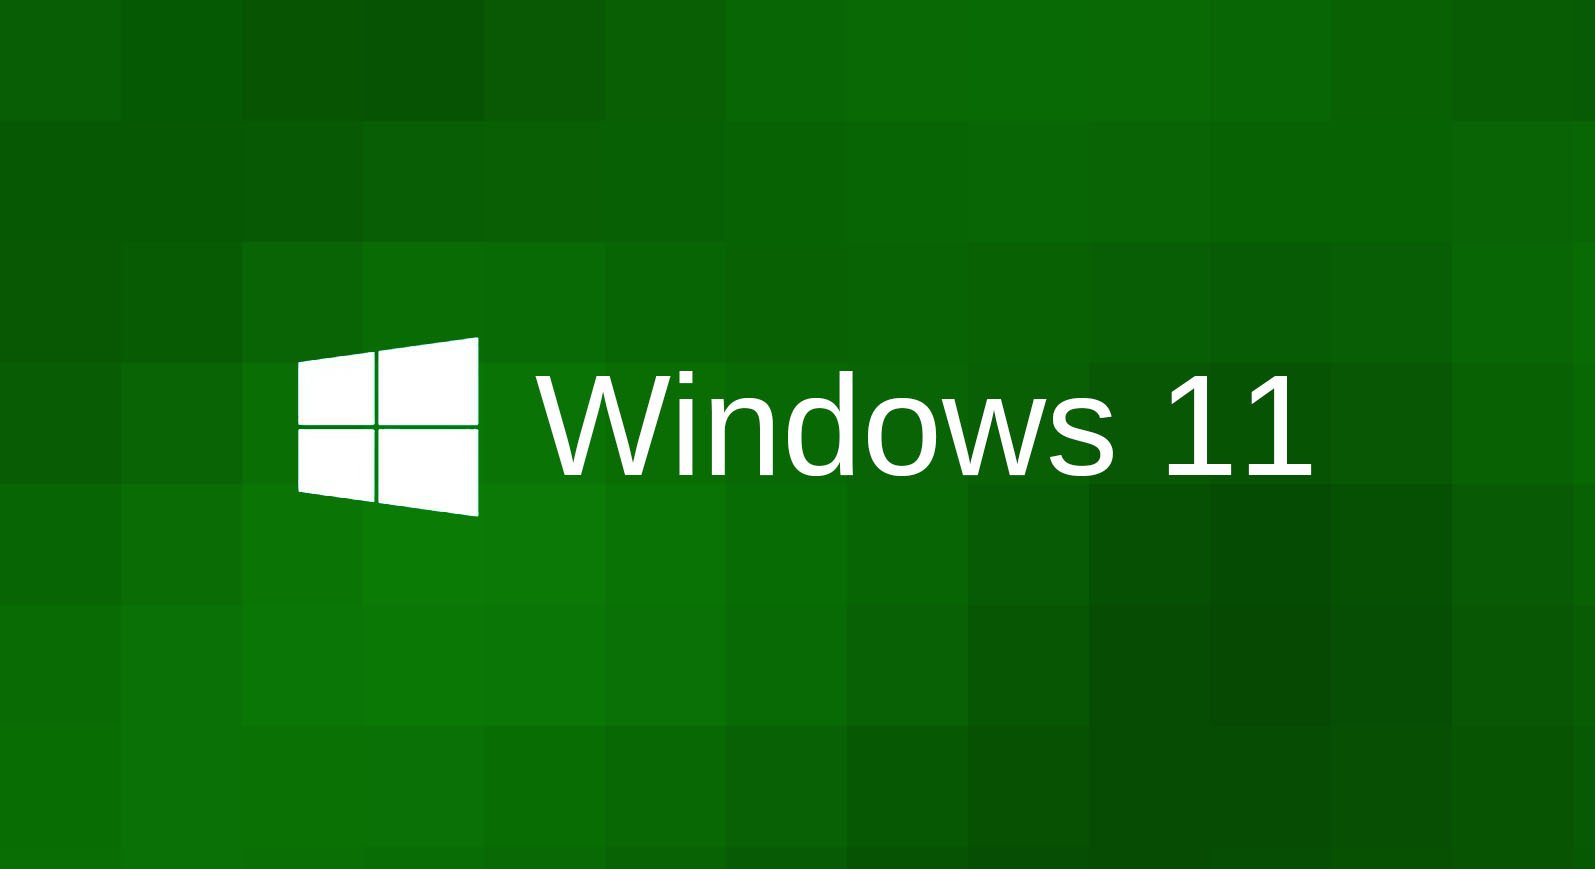 Лицензионная windows 11. Microsoft Windows 11. Логотип виндовс 11. Виндовс 11 Дата. Заставка виндовс 11.